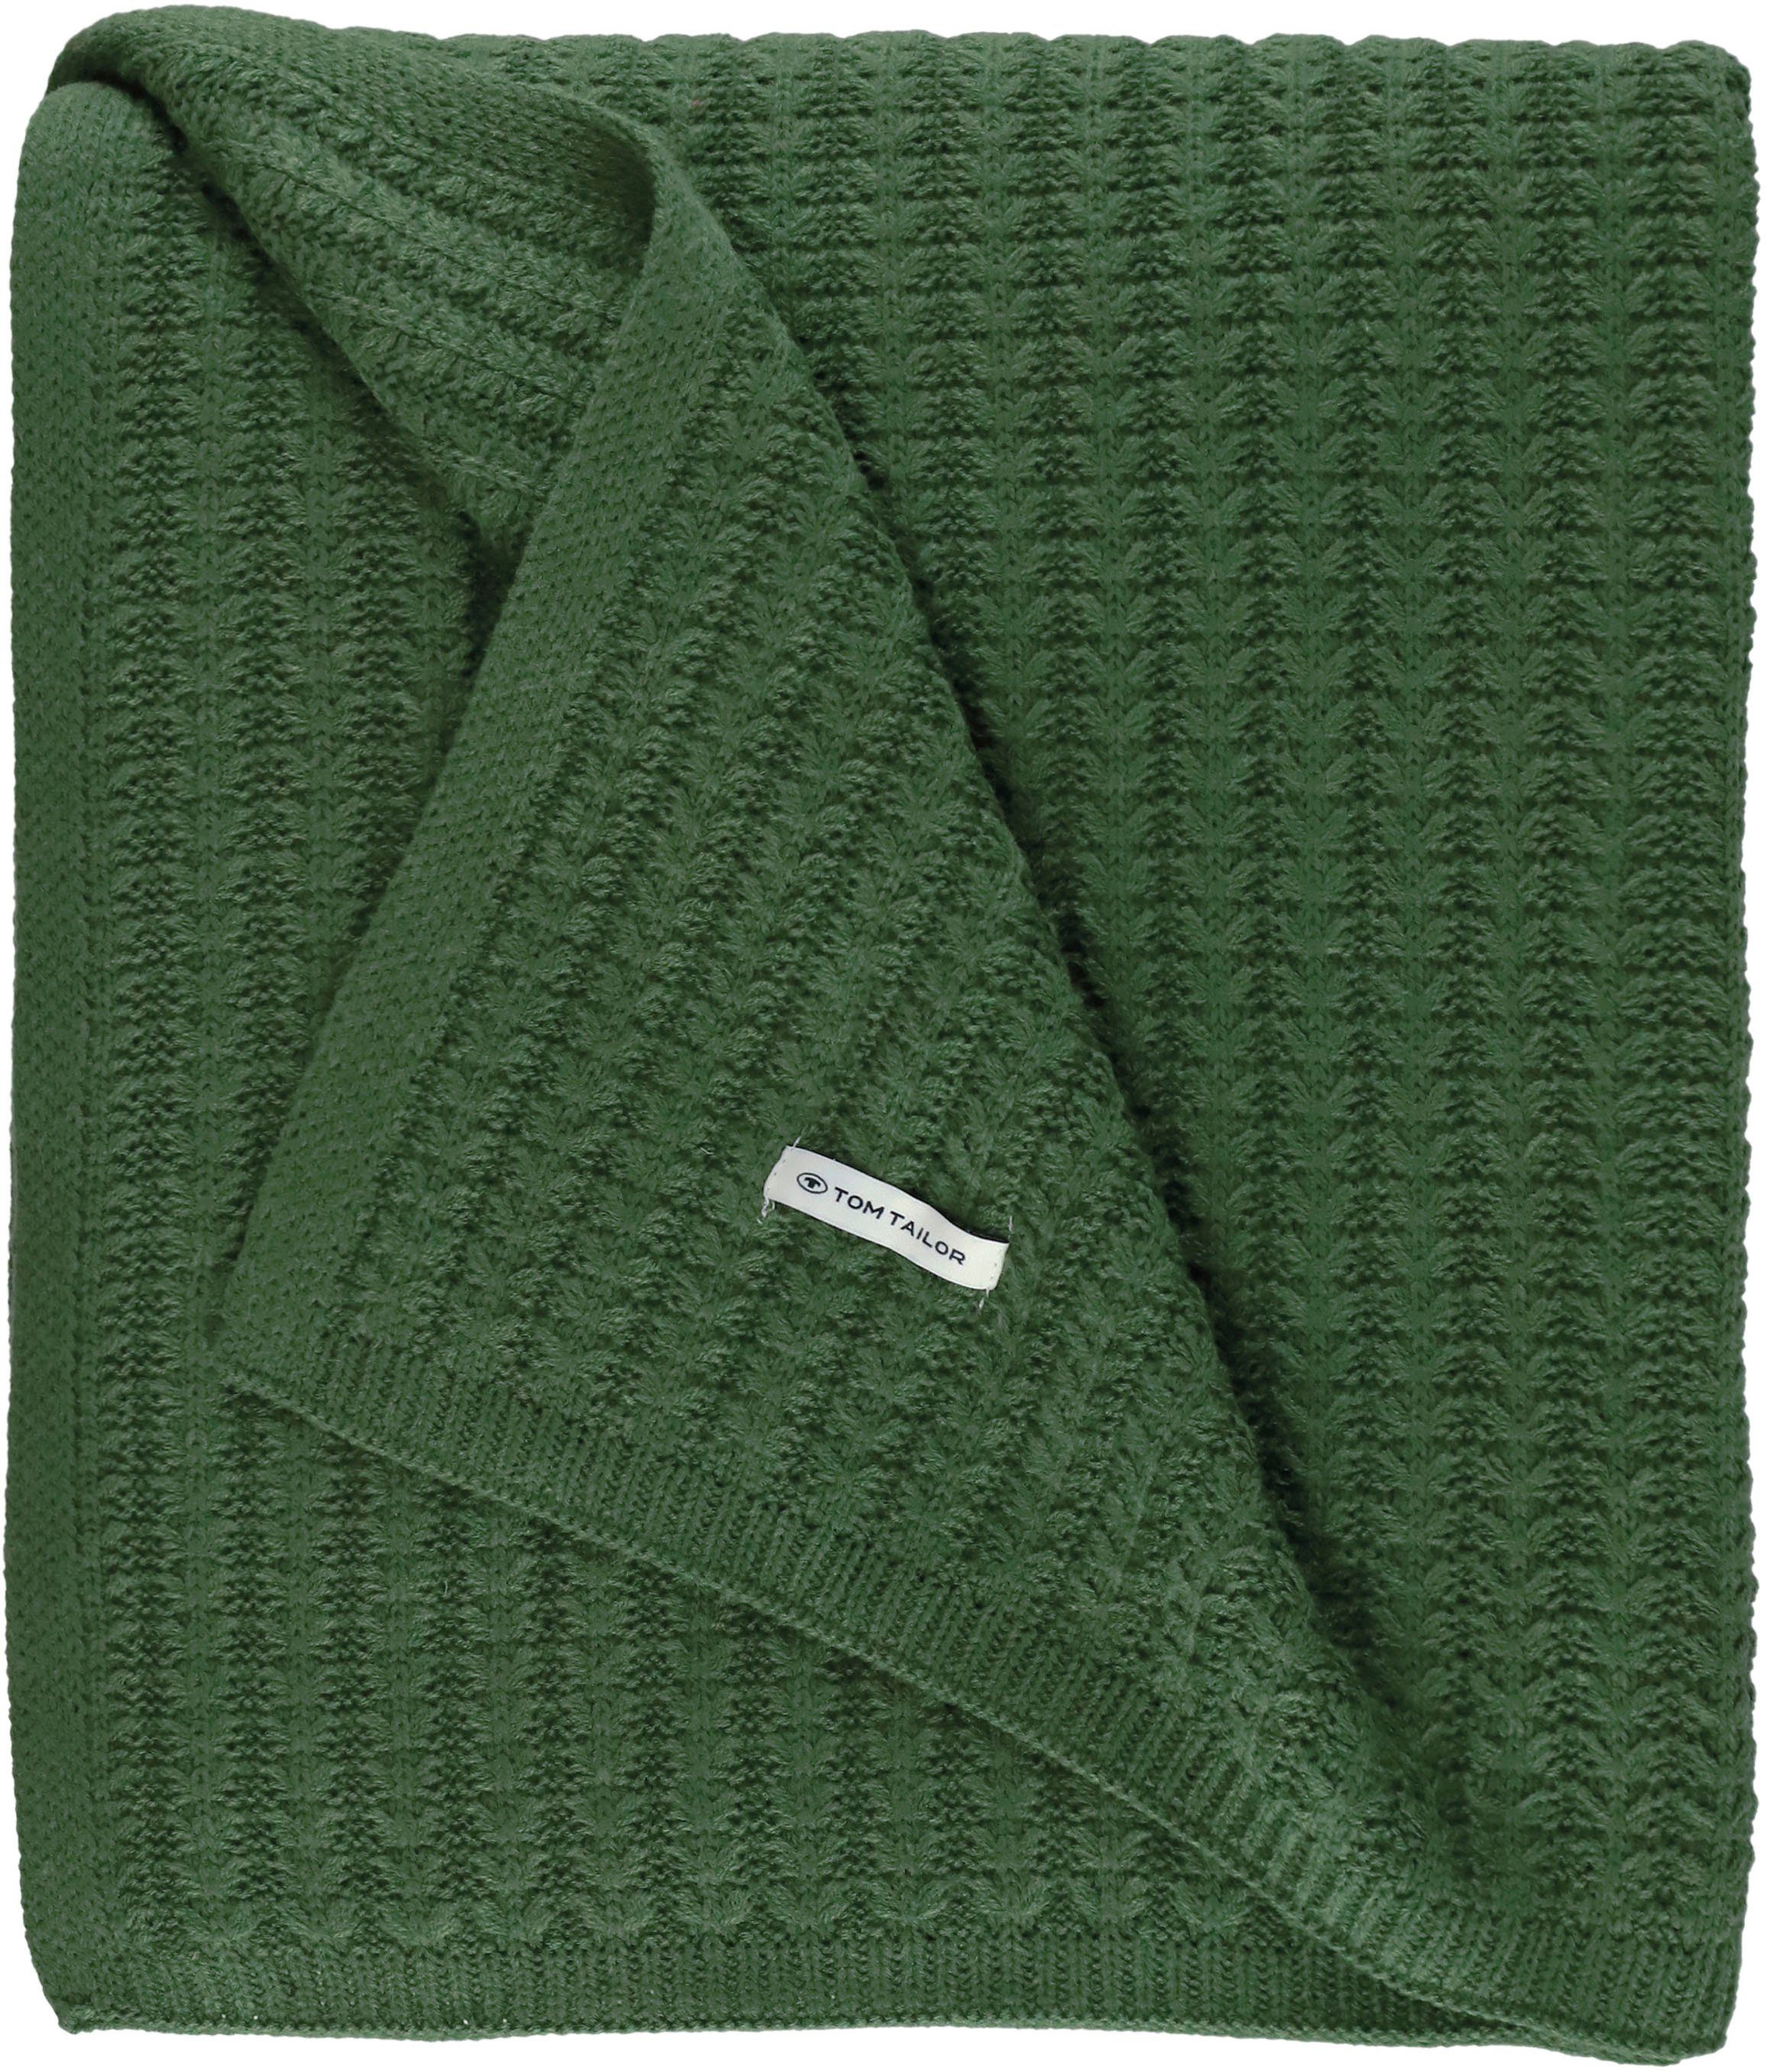 TOM Plaid HOME TAILOR Knitted, grün